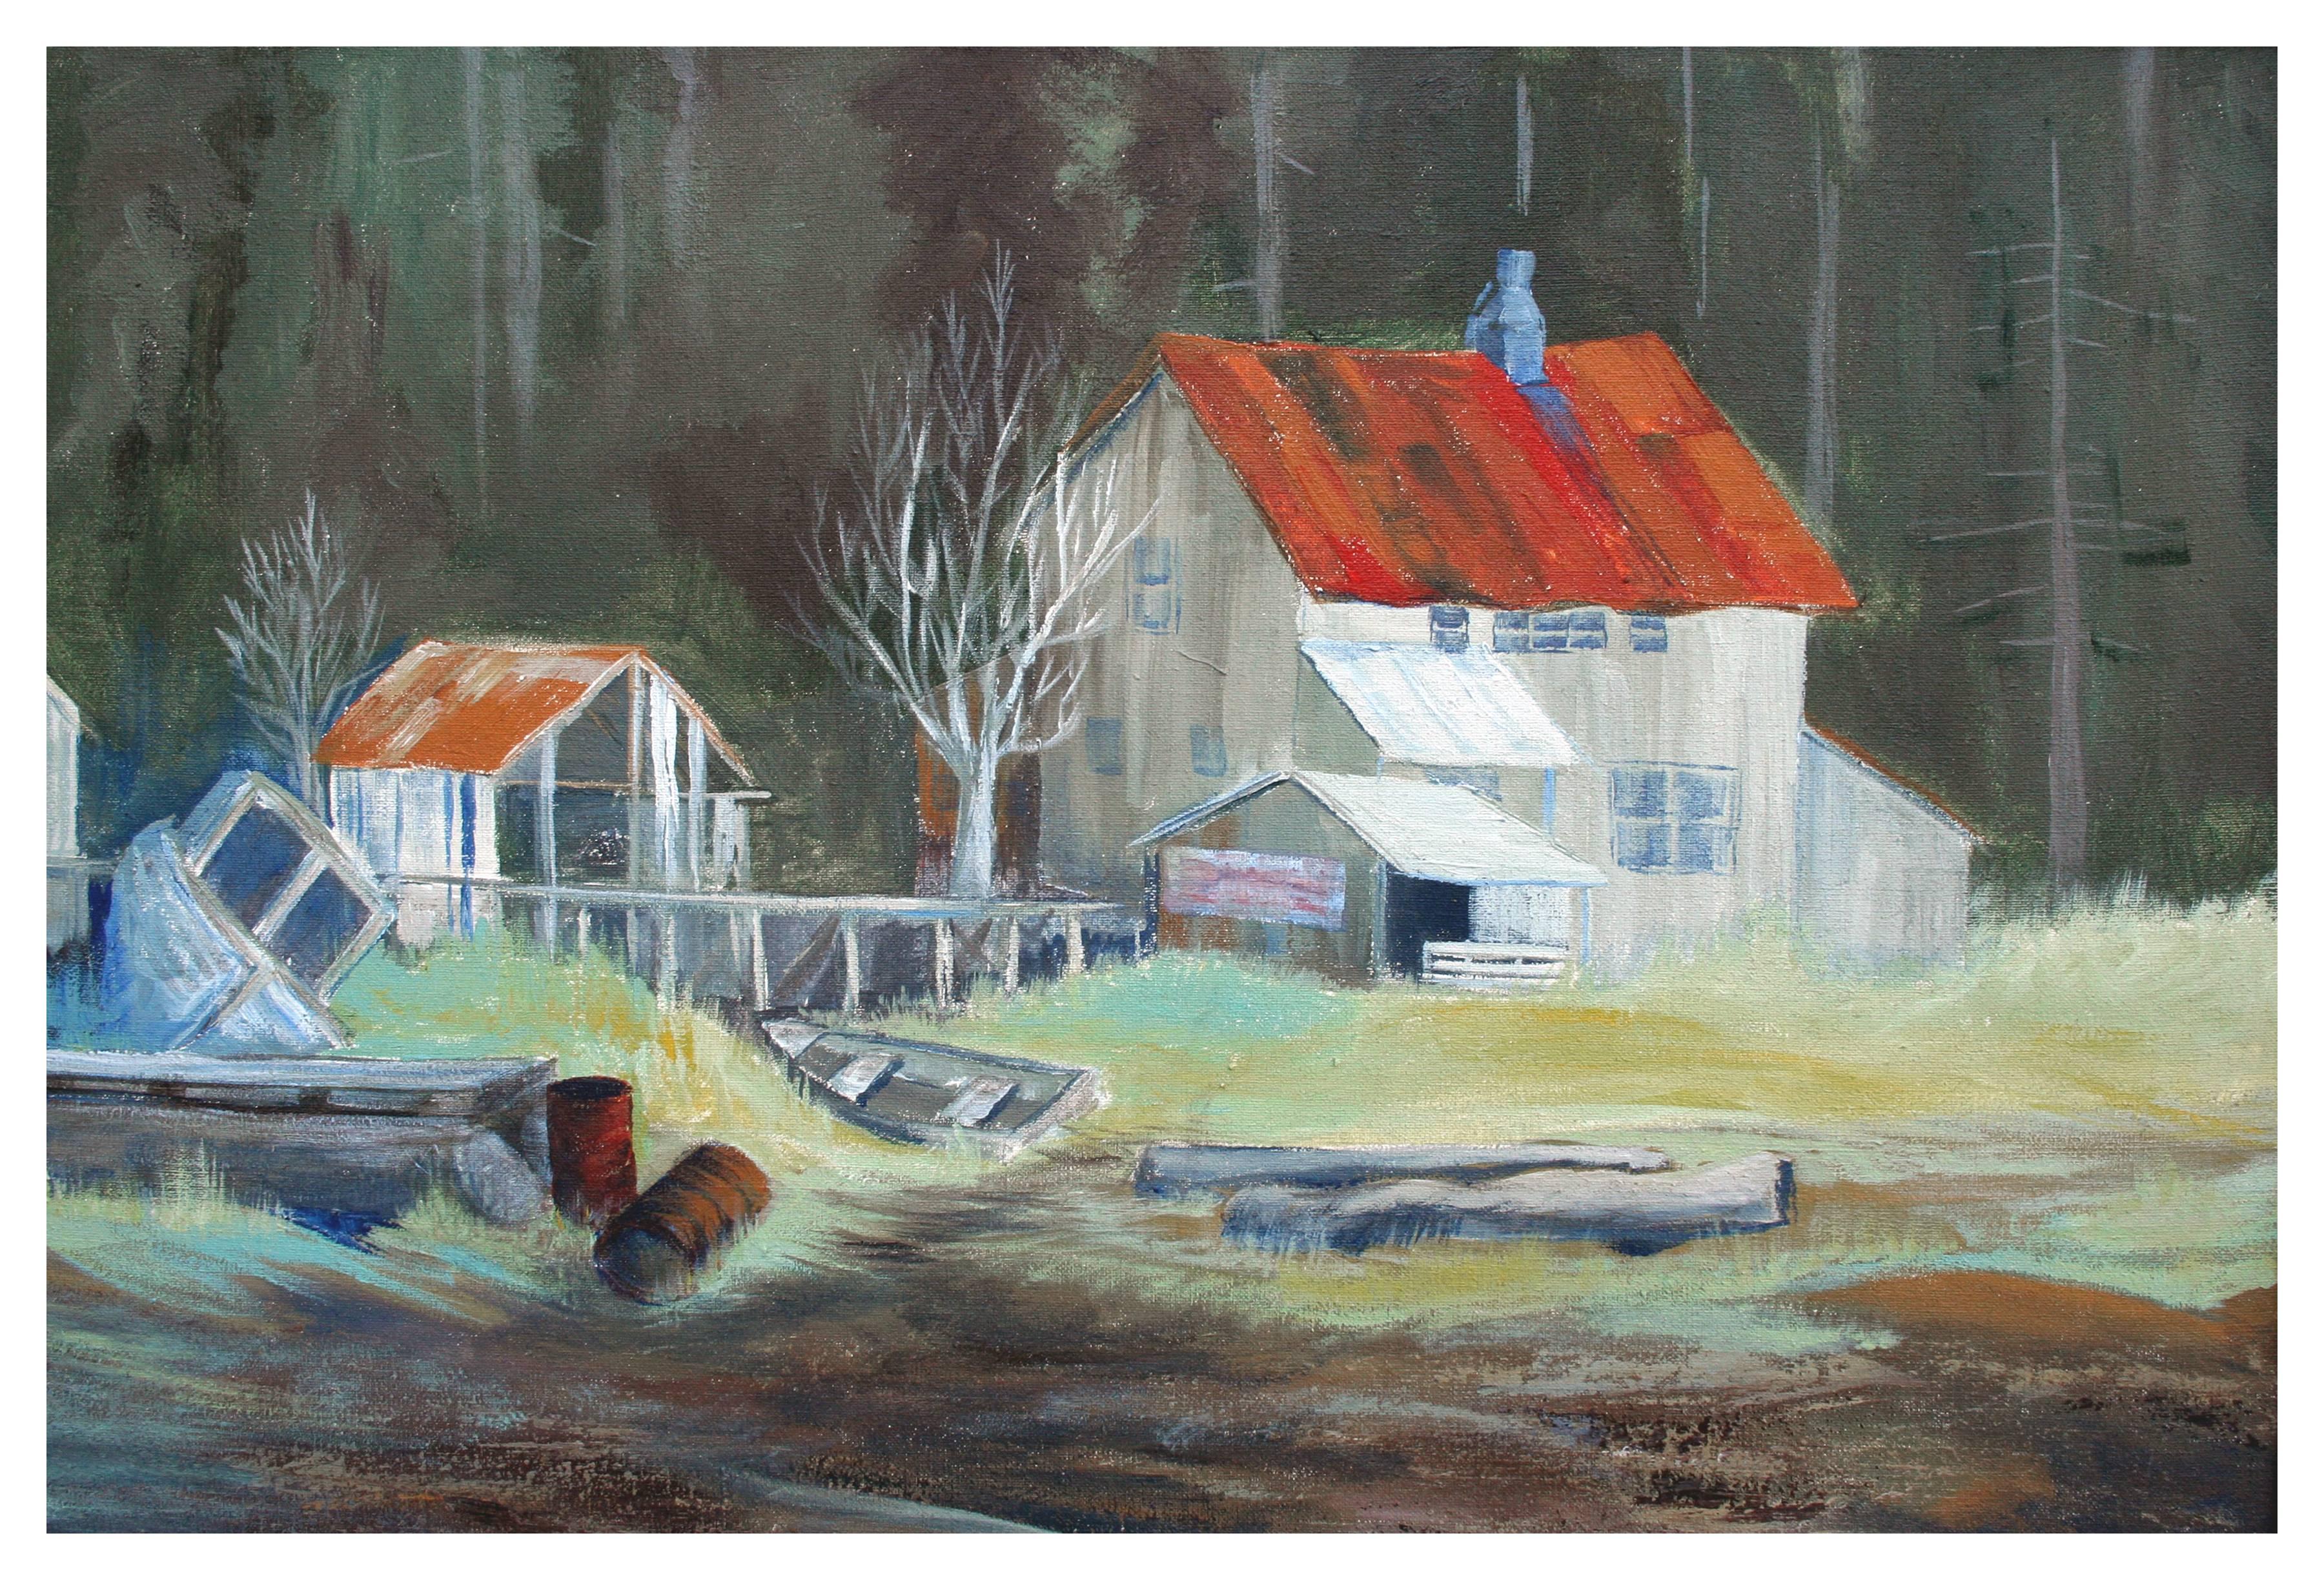 1970's On the Lake Landscape - Painting by Linda Larsen 